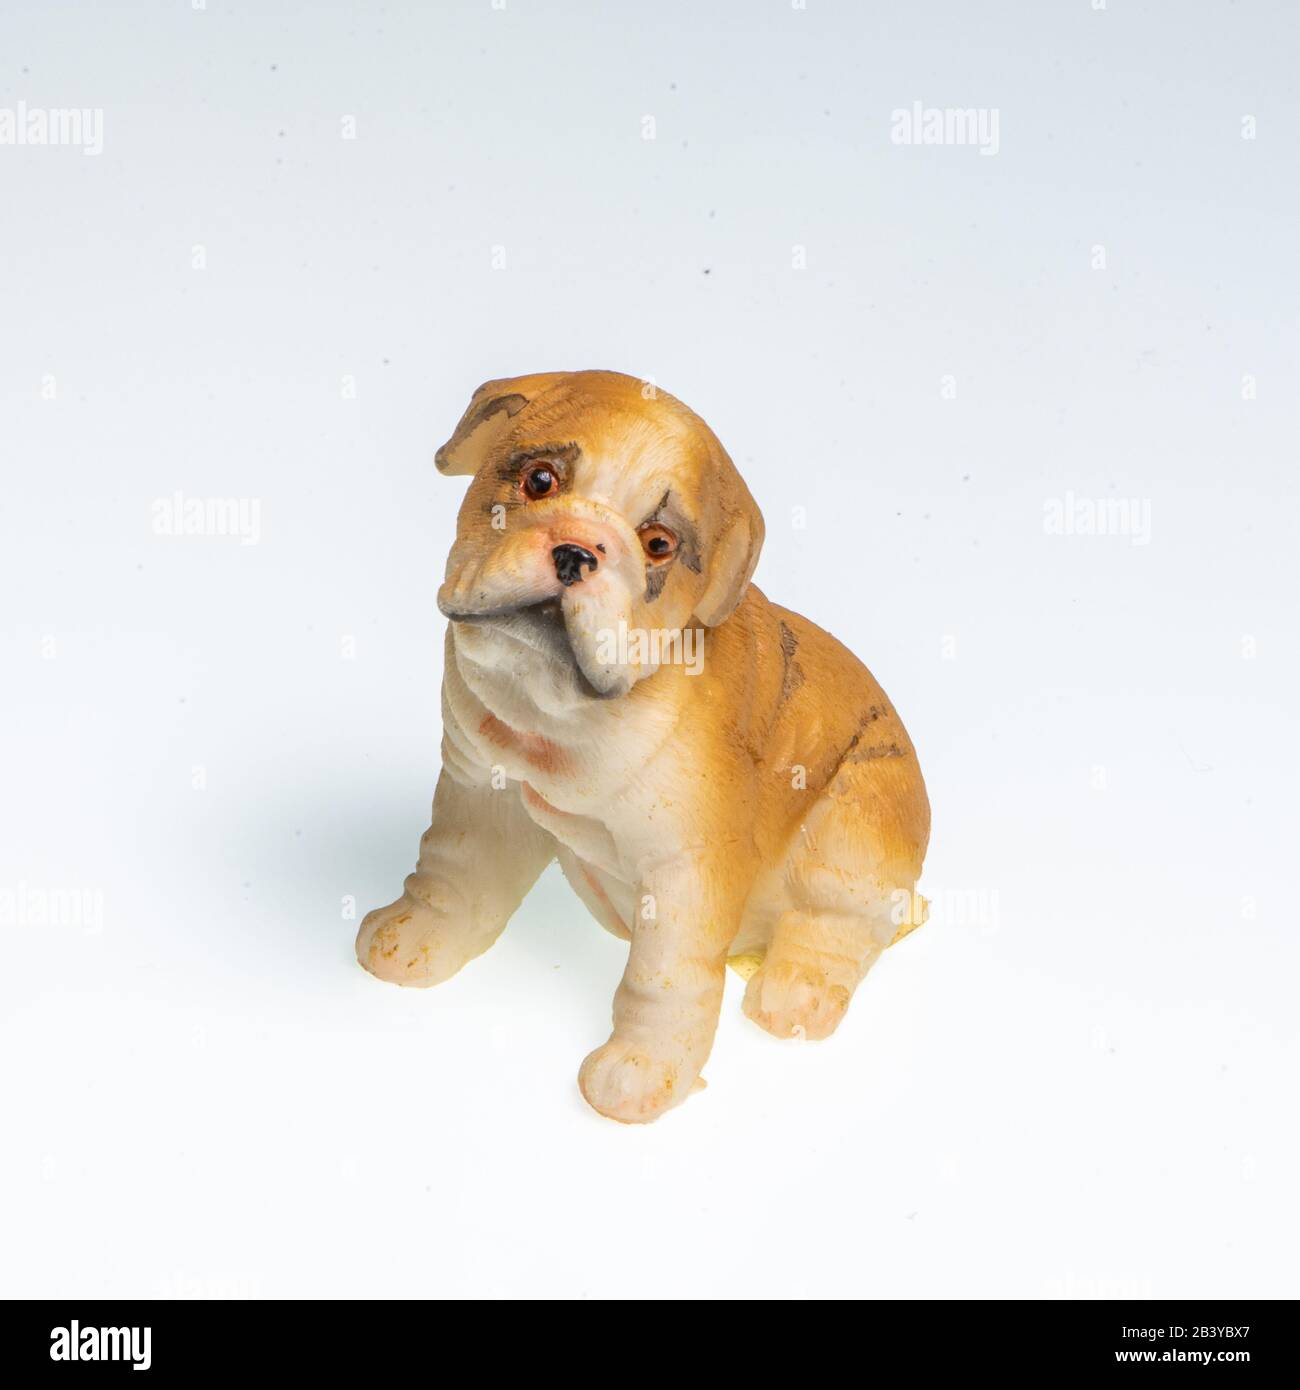 Miniature depicting an English Bulldog breed dog on a white background Stock Photo